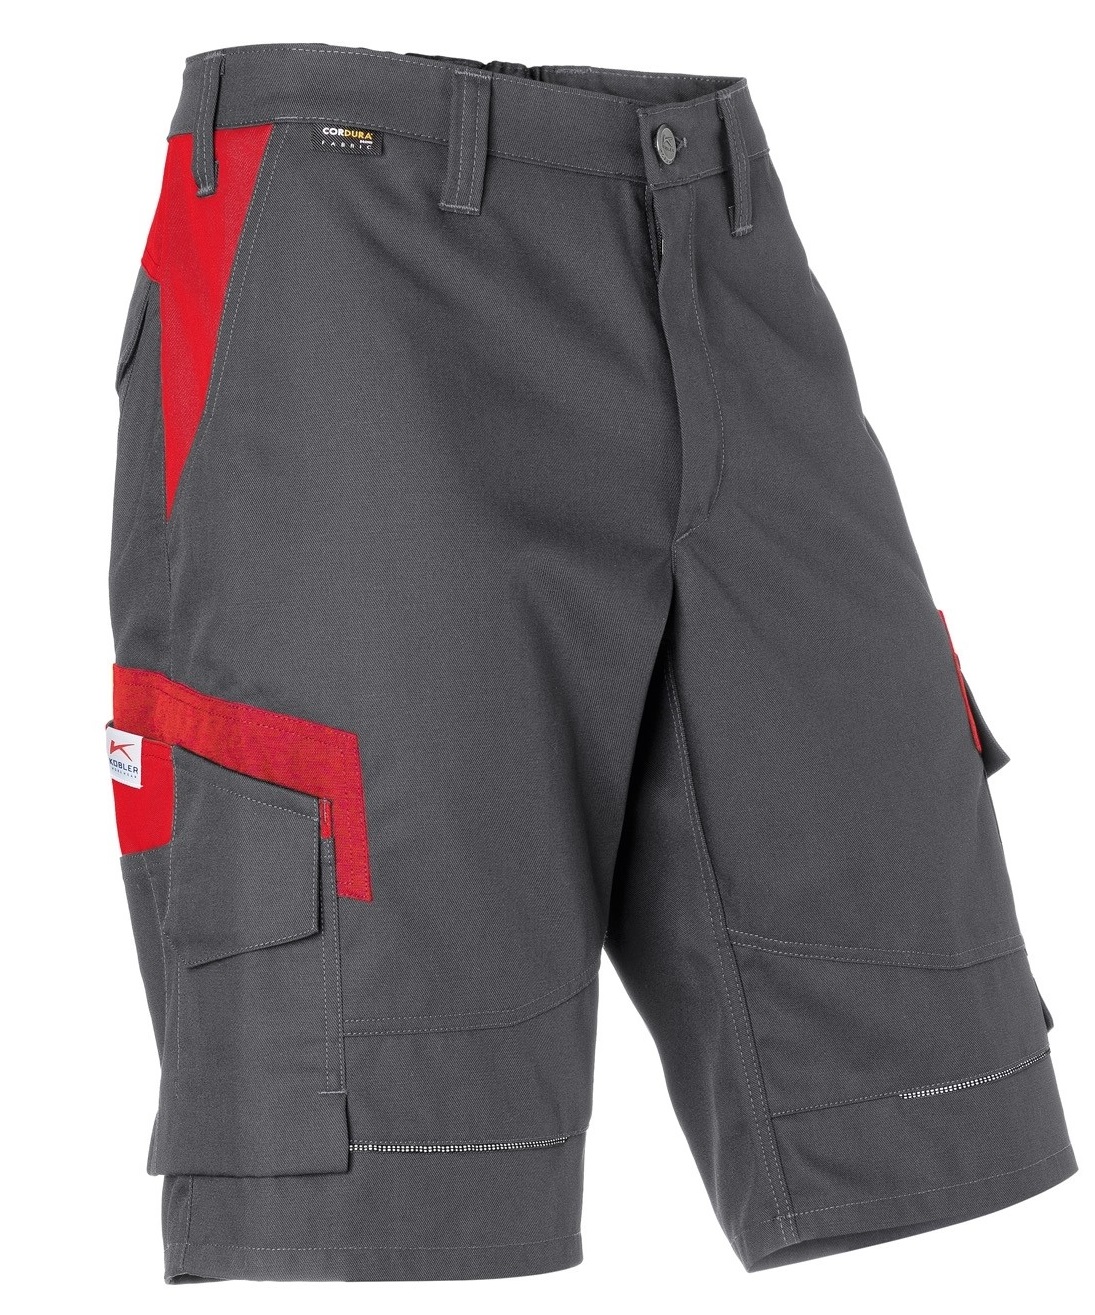 Shorts, KÜBLER-Workwear, Innovatiq, g/m², anthrazit/mittelrot 295